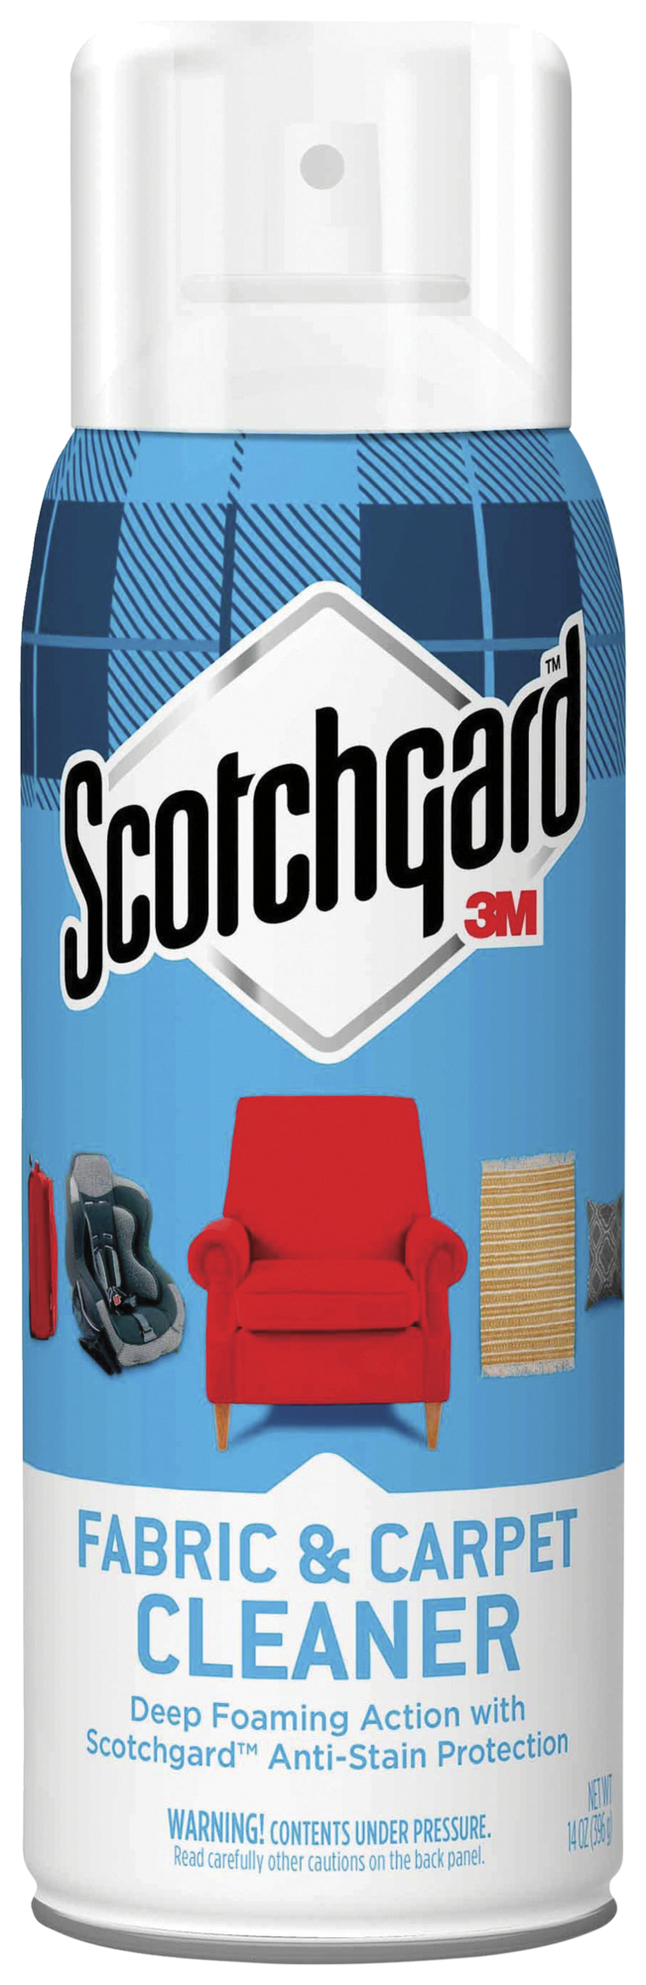 Picture of Merchandise 3436993 14 oz Scotchgard Fabric & Carpet Cleaner